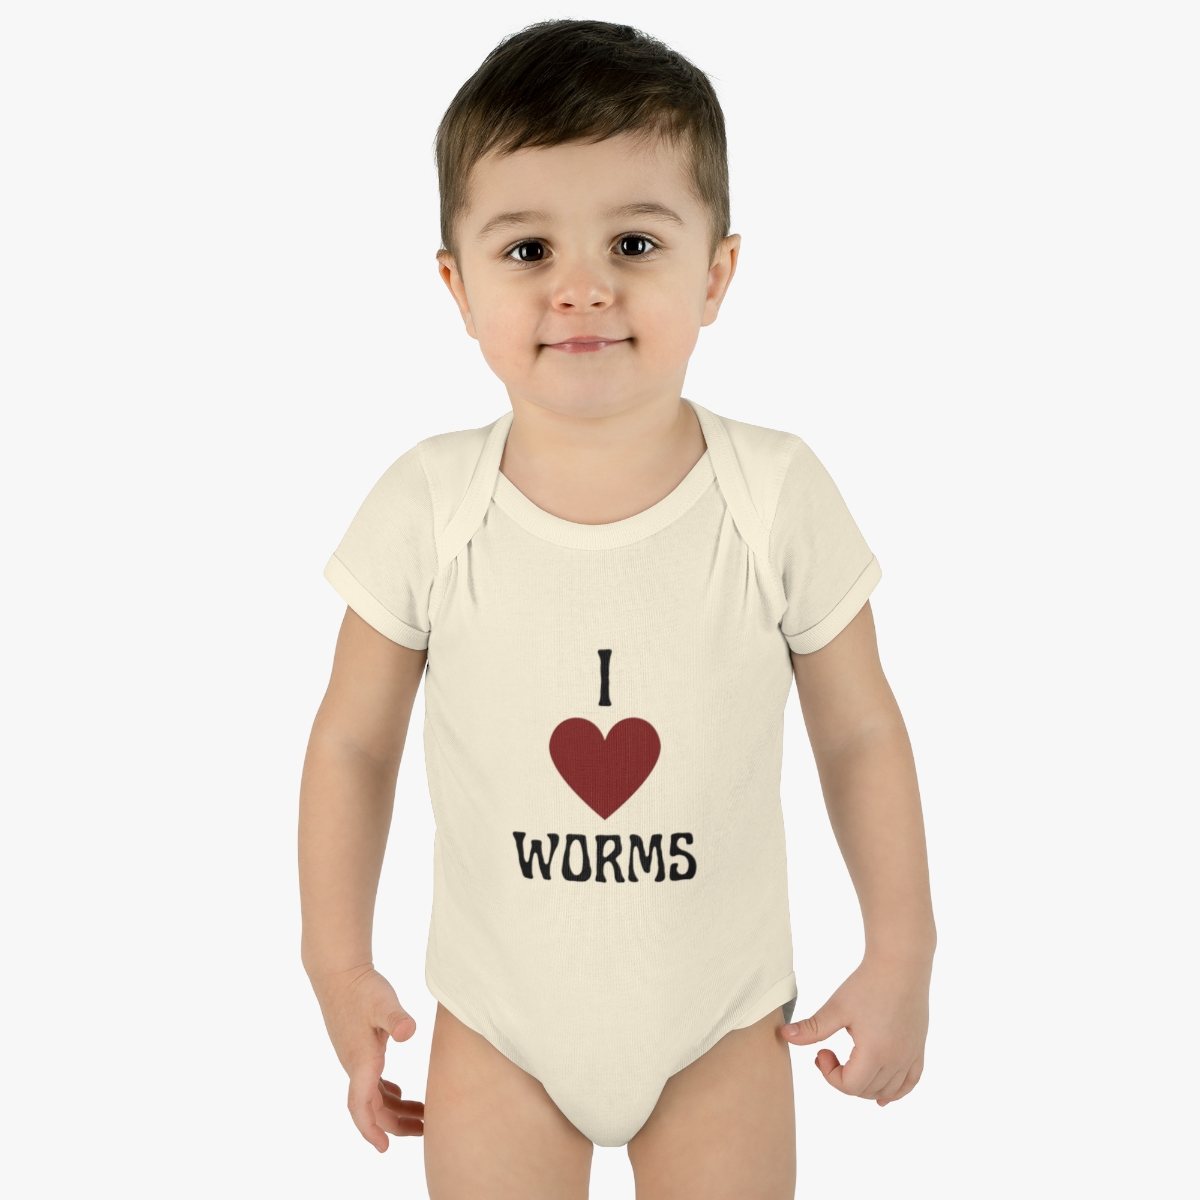 "I love worms" Infant Baby Rib Bodysuit product thumbnail image